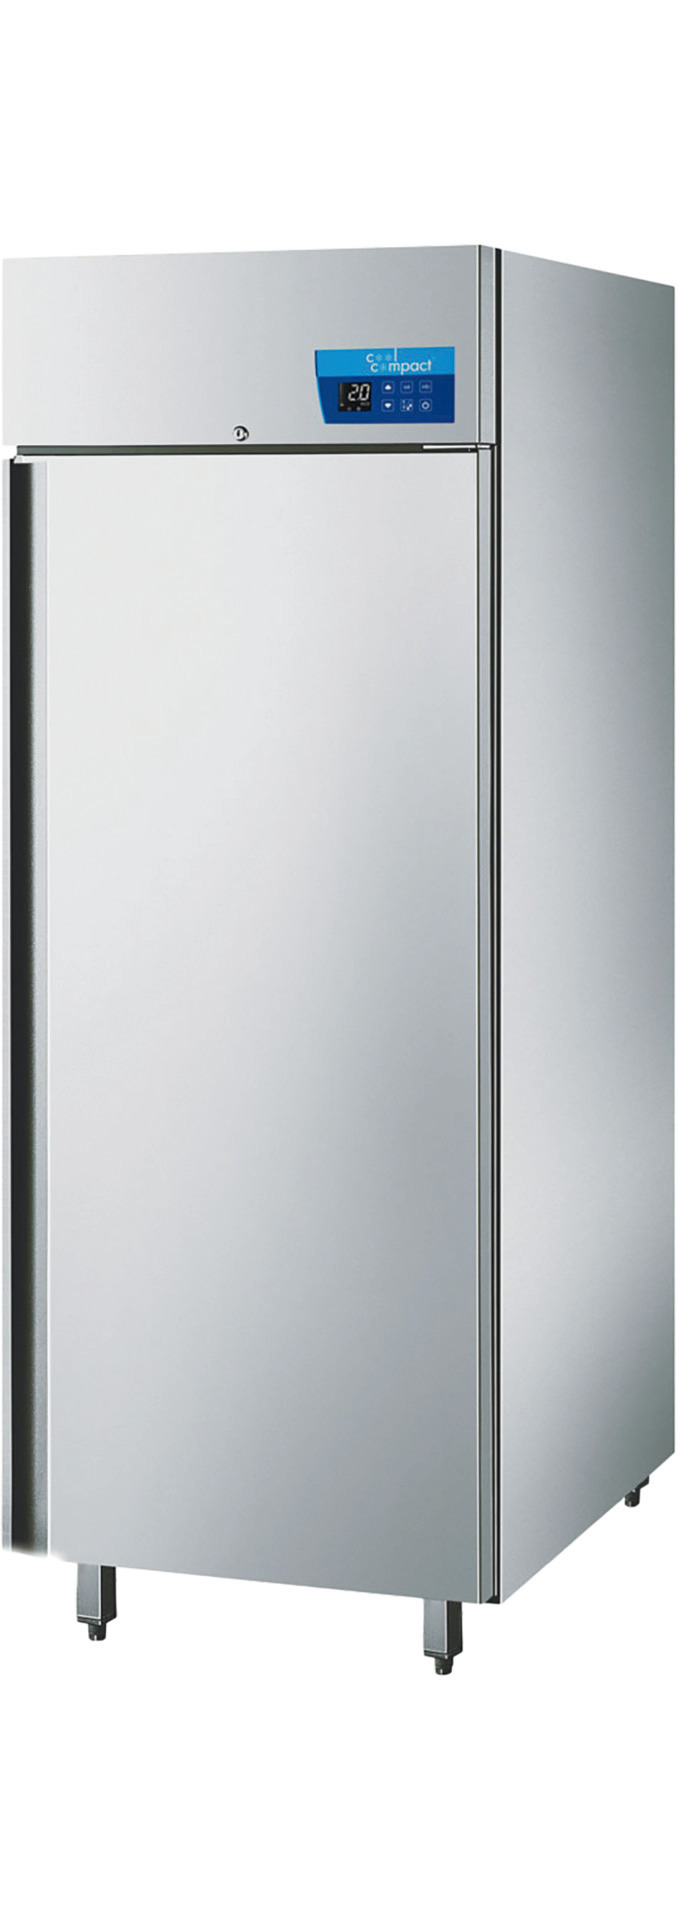 Umluft-Kühlschrank 21 x GN 2/1 / zentralgekühlt